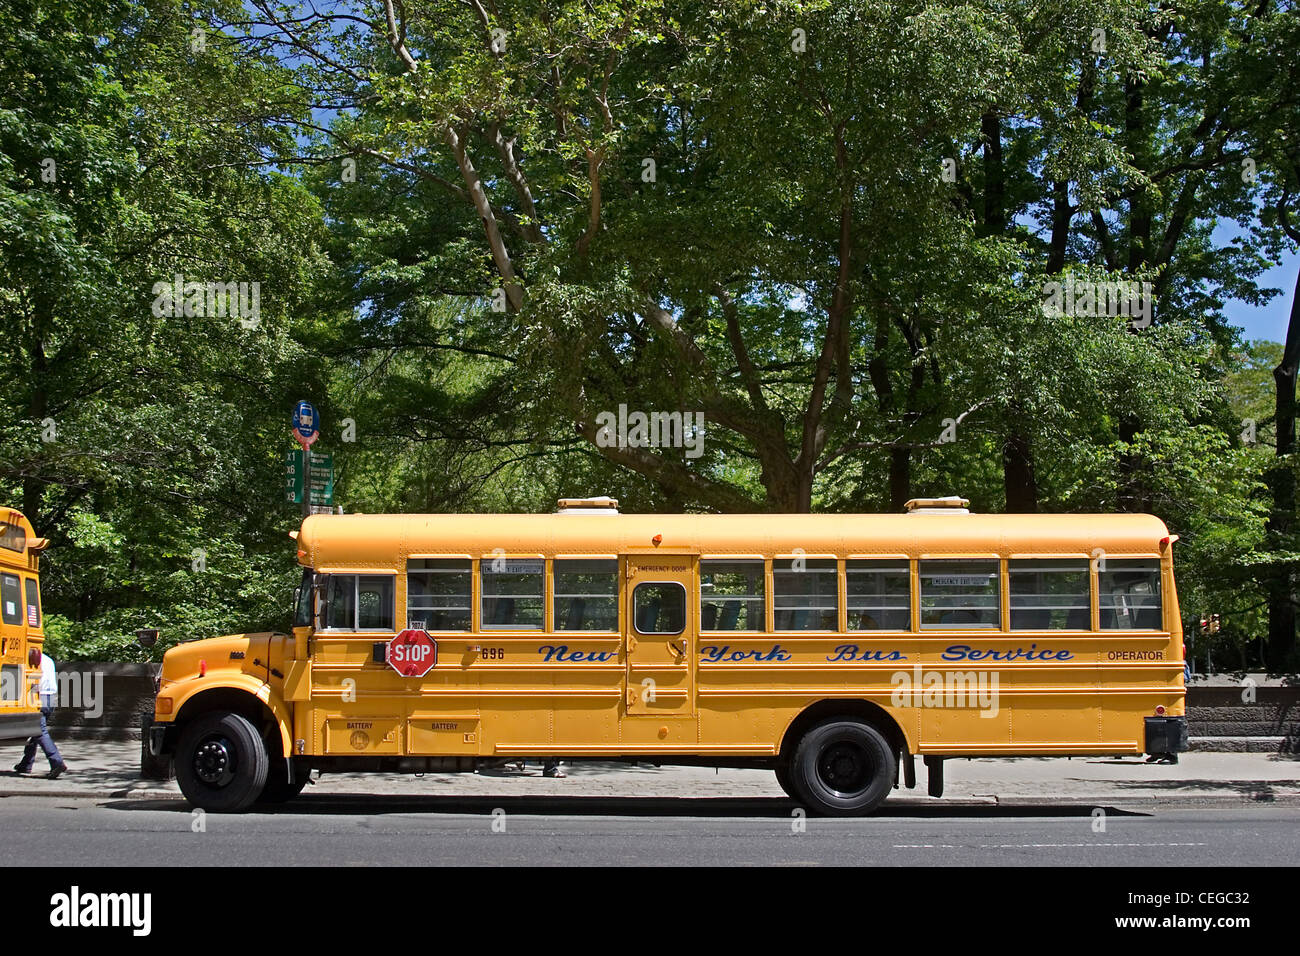 School bus, Central Park, New York City Stock Photo